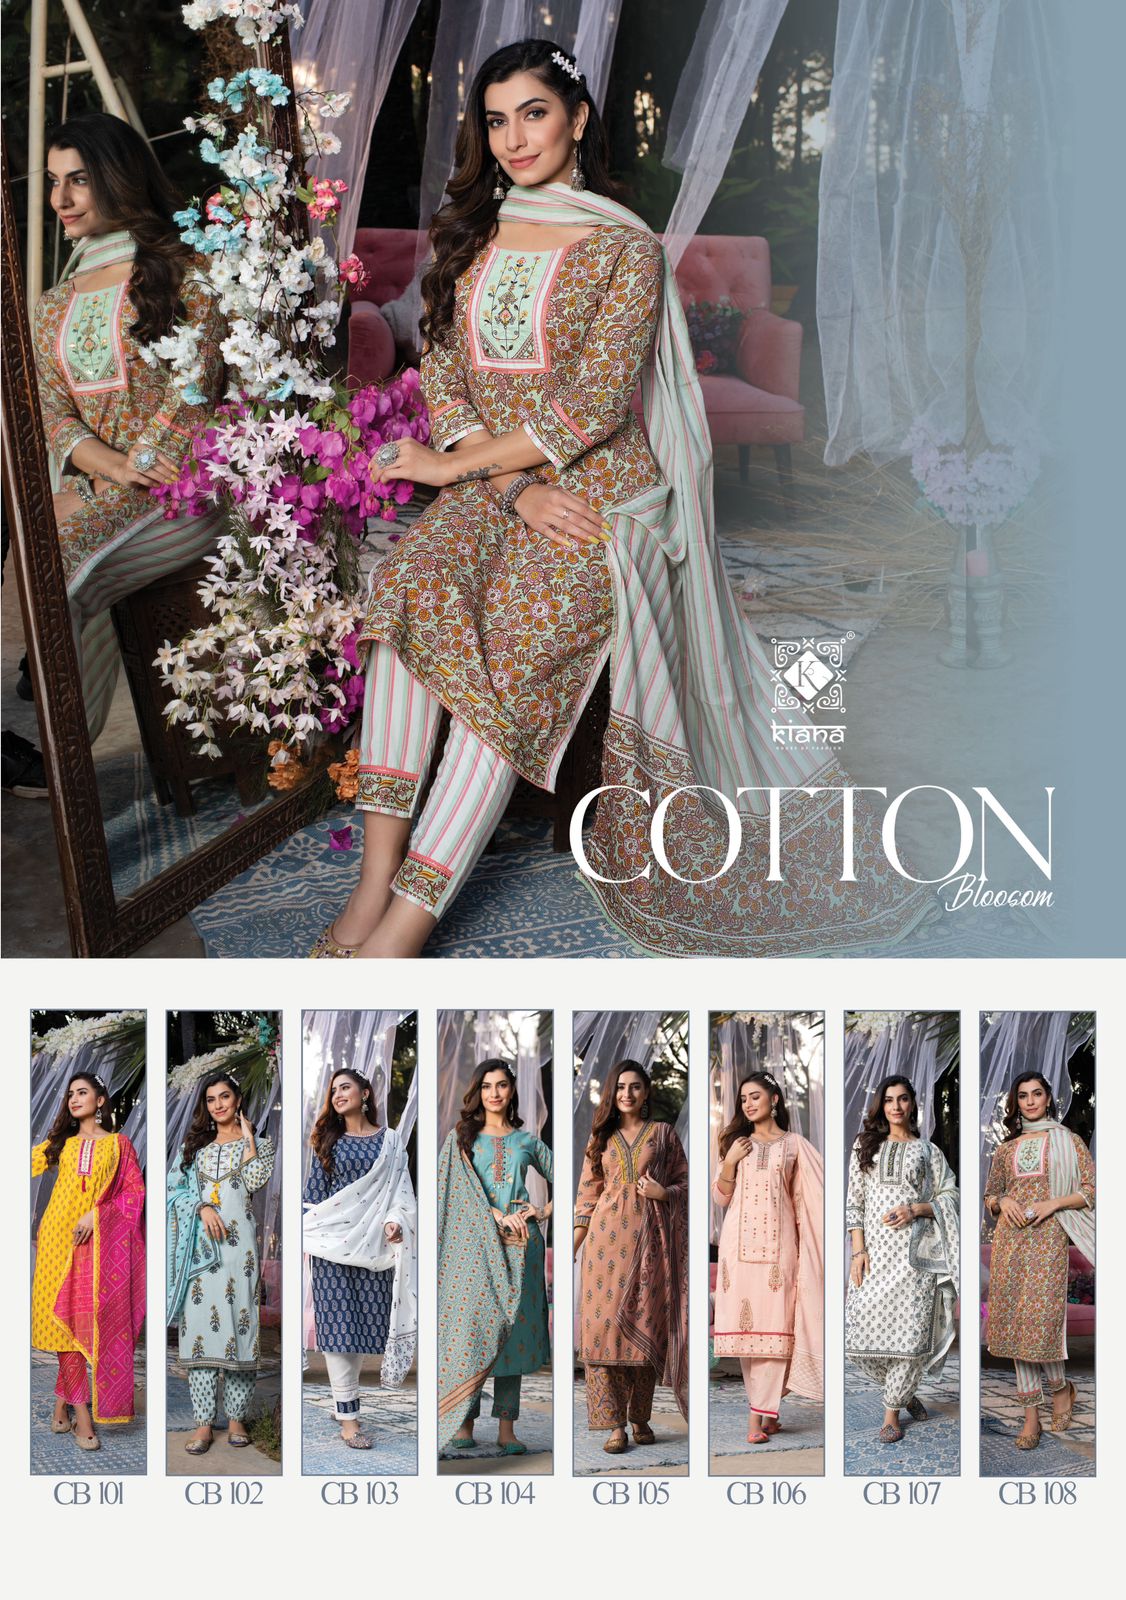 Kiana Fashion Cotton Bloosom 101-108